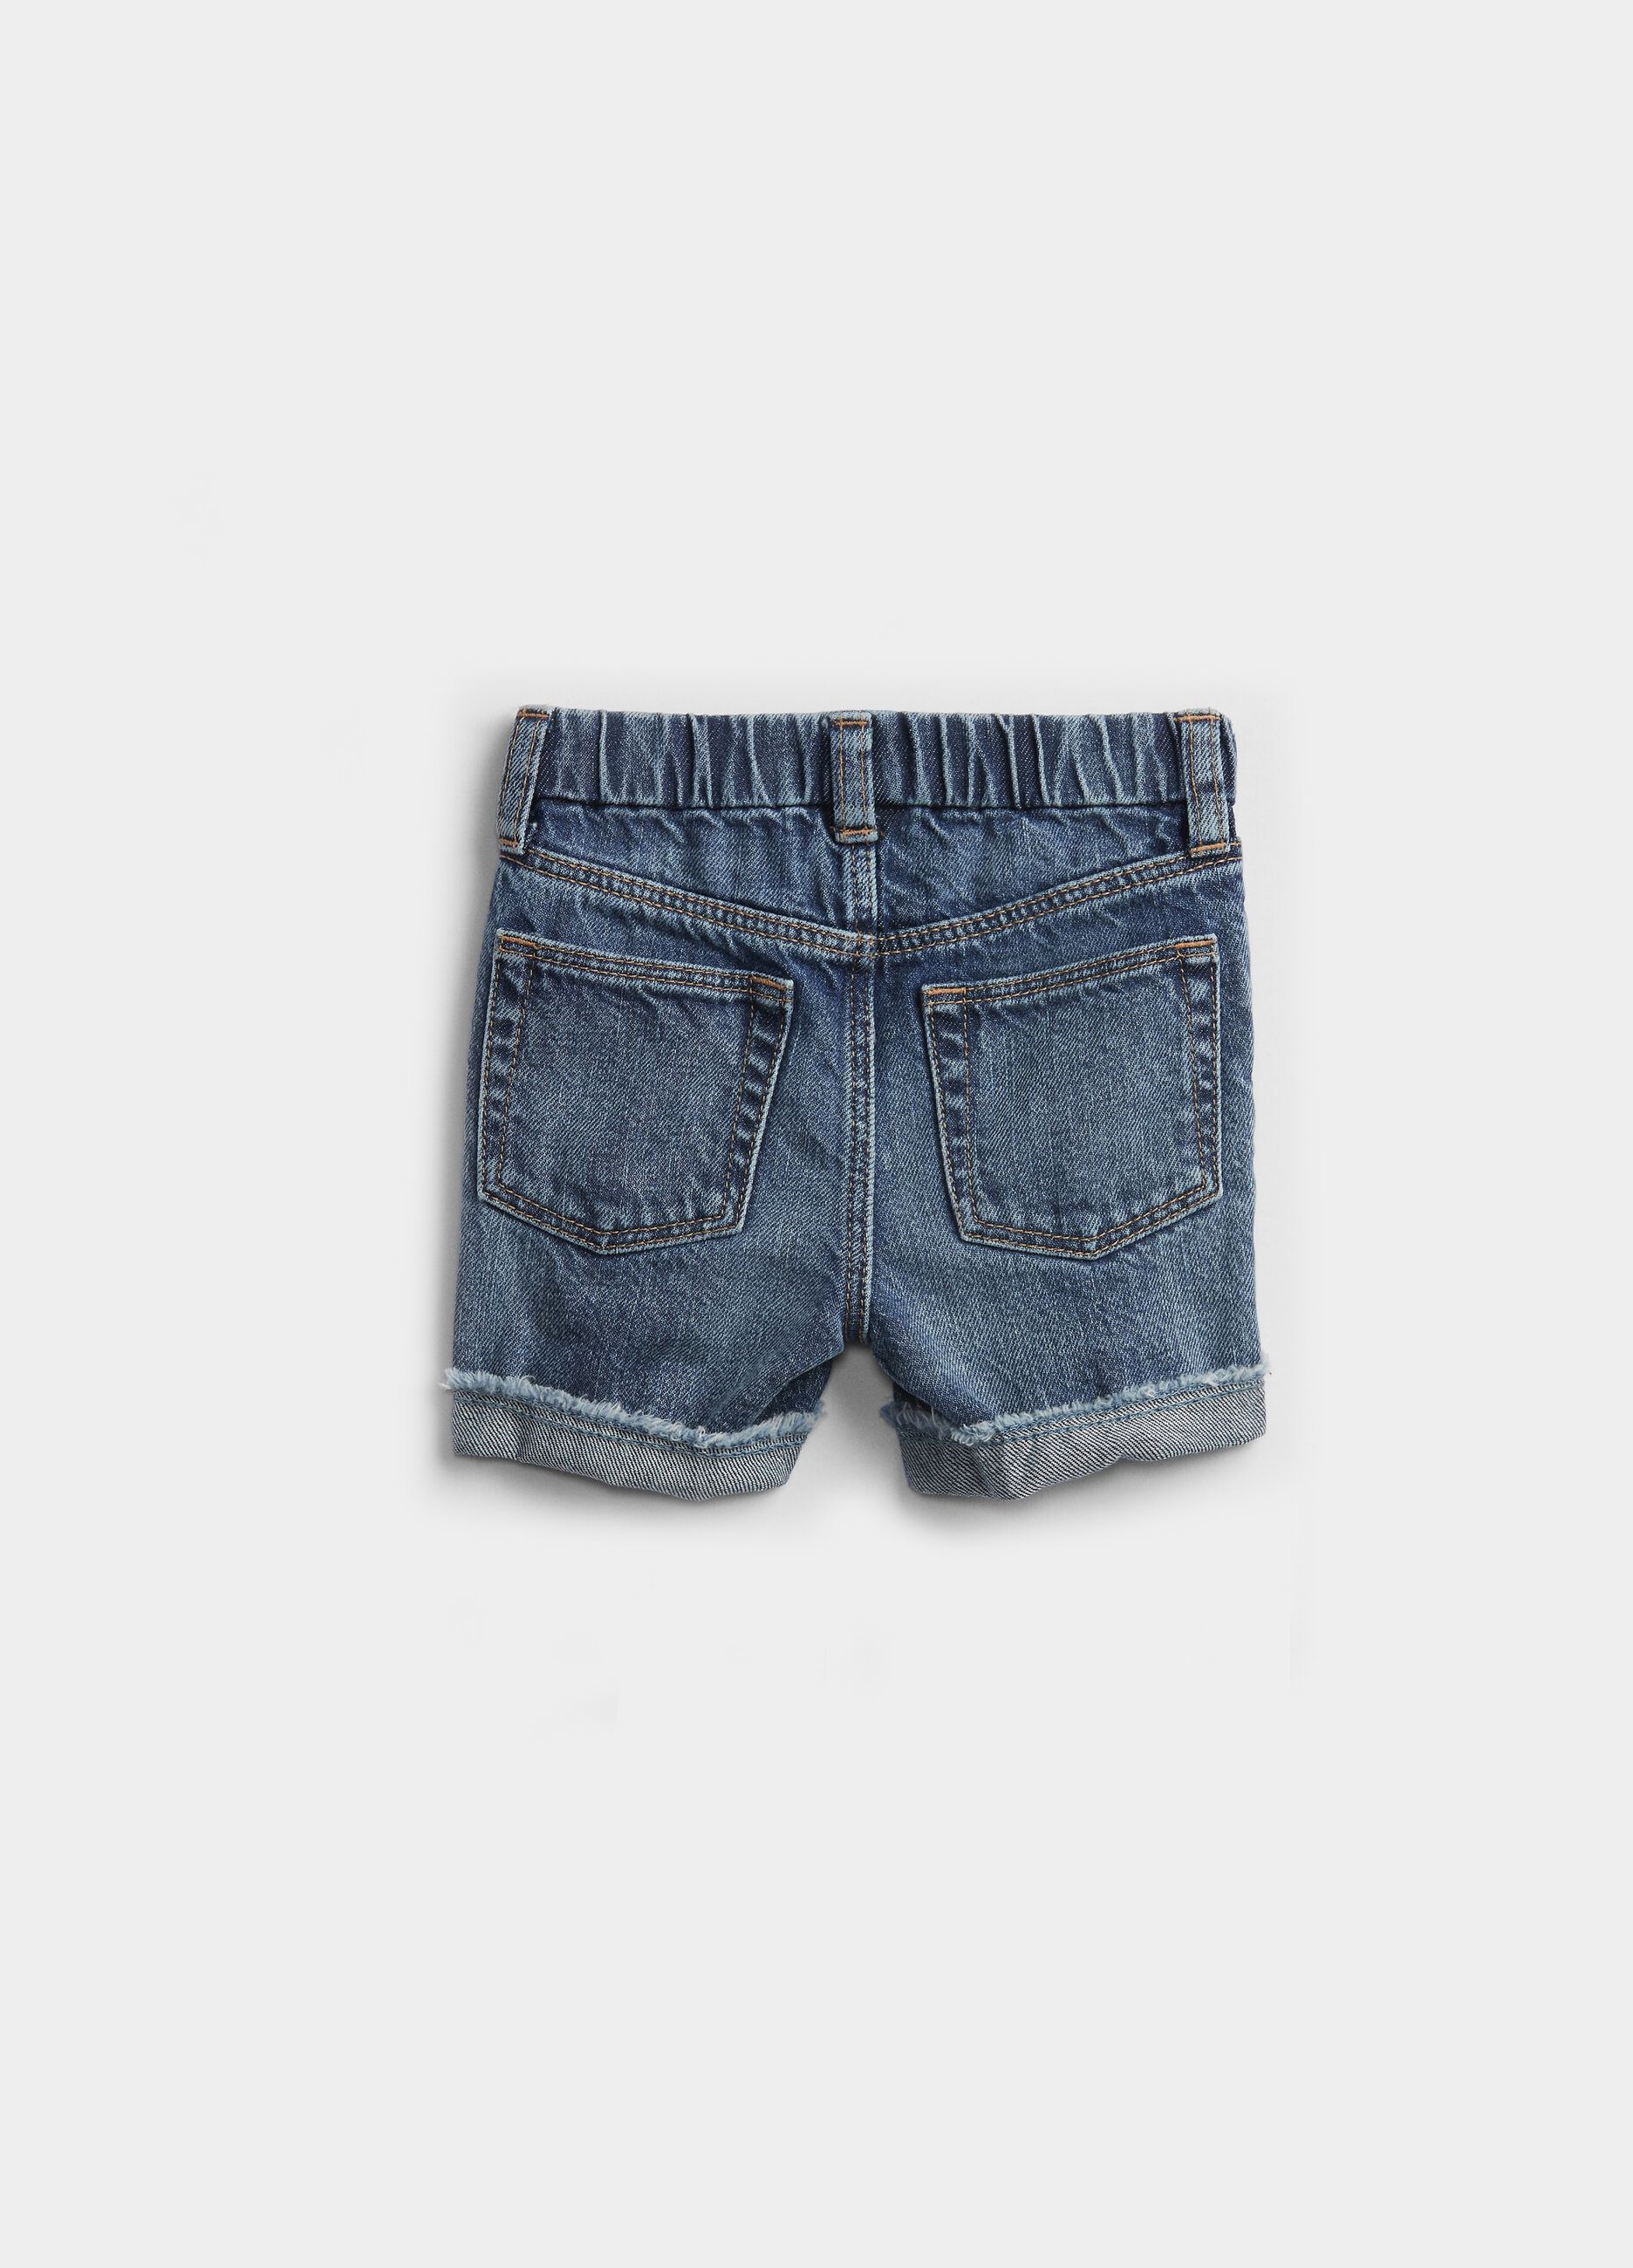 Shorts in denim pull-on